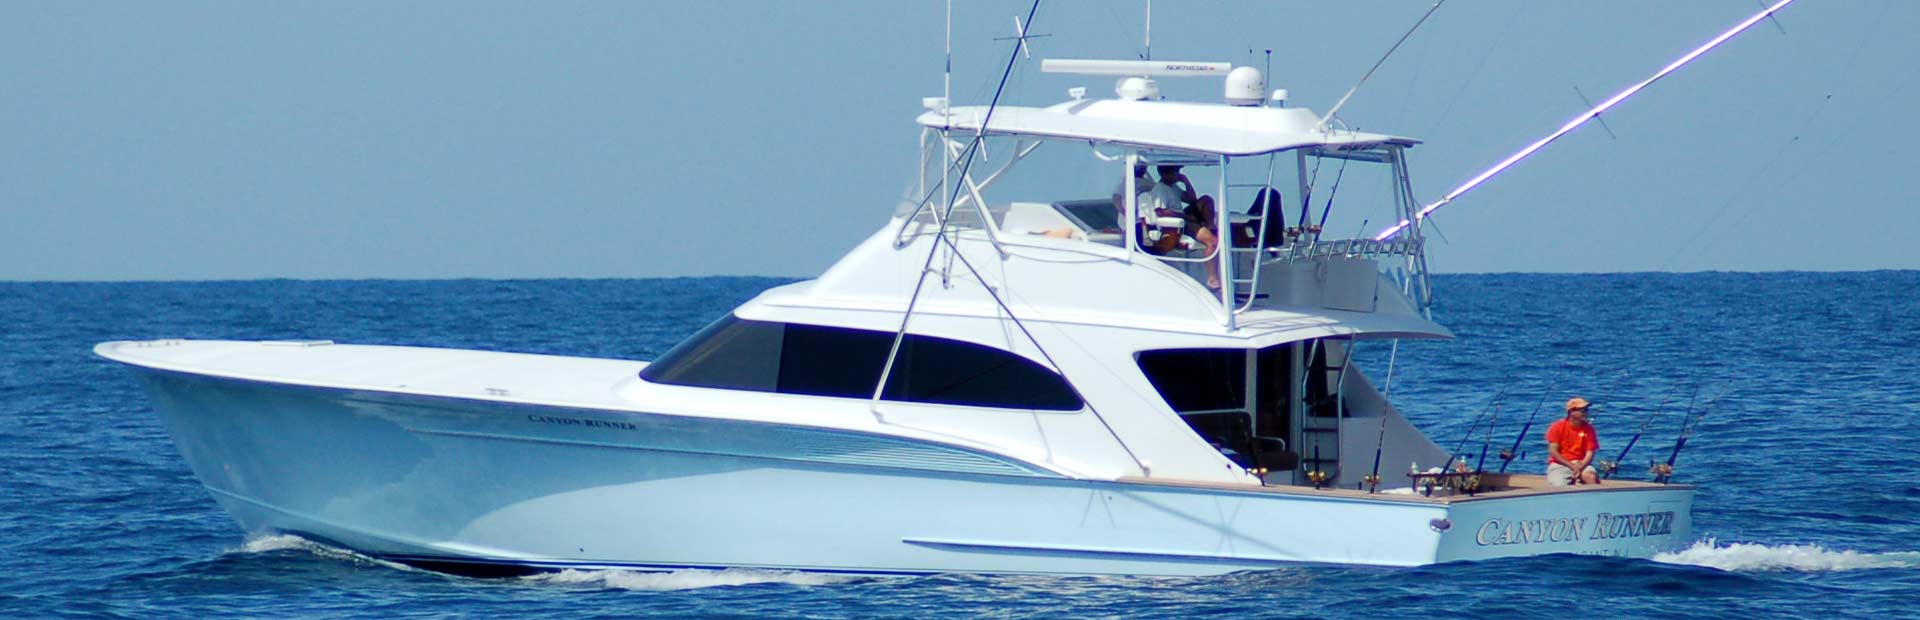 Donate Boat, Yacht or Jet Ski in Louisiana - Sailboat Donations Too!